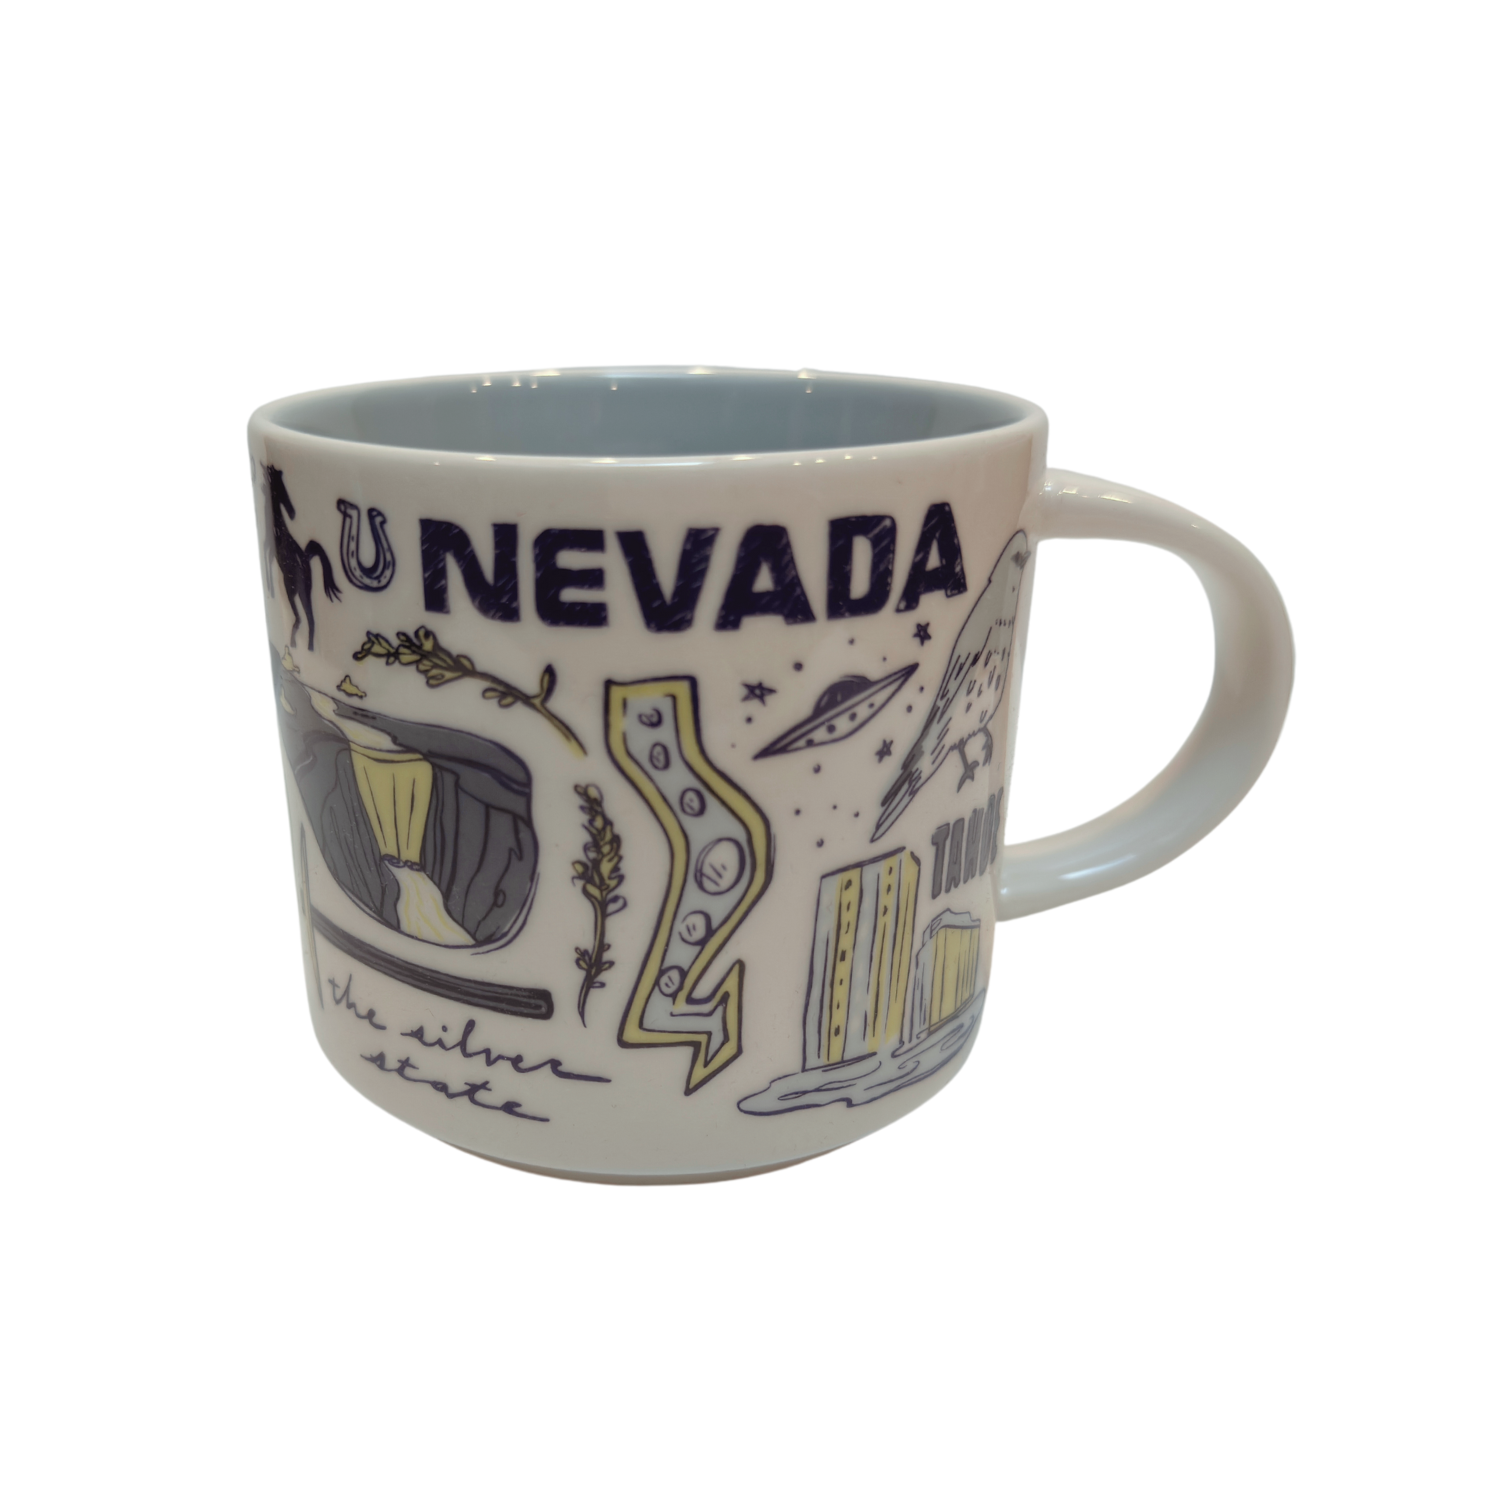 Starbucks Been There Series Nevada Ceramic Coffee Mug, 14 Oz